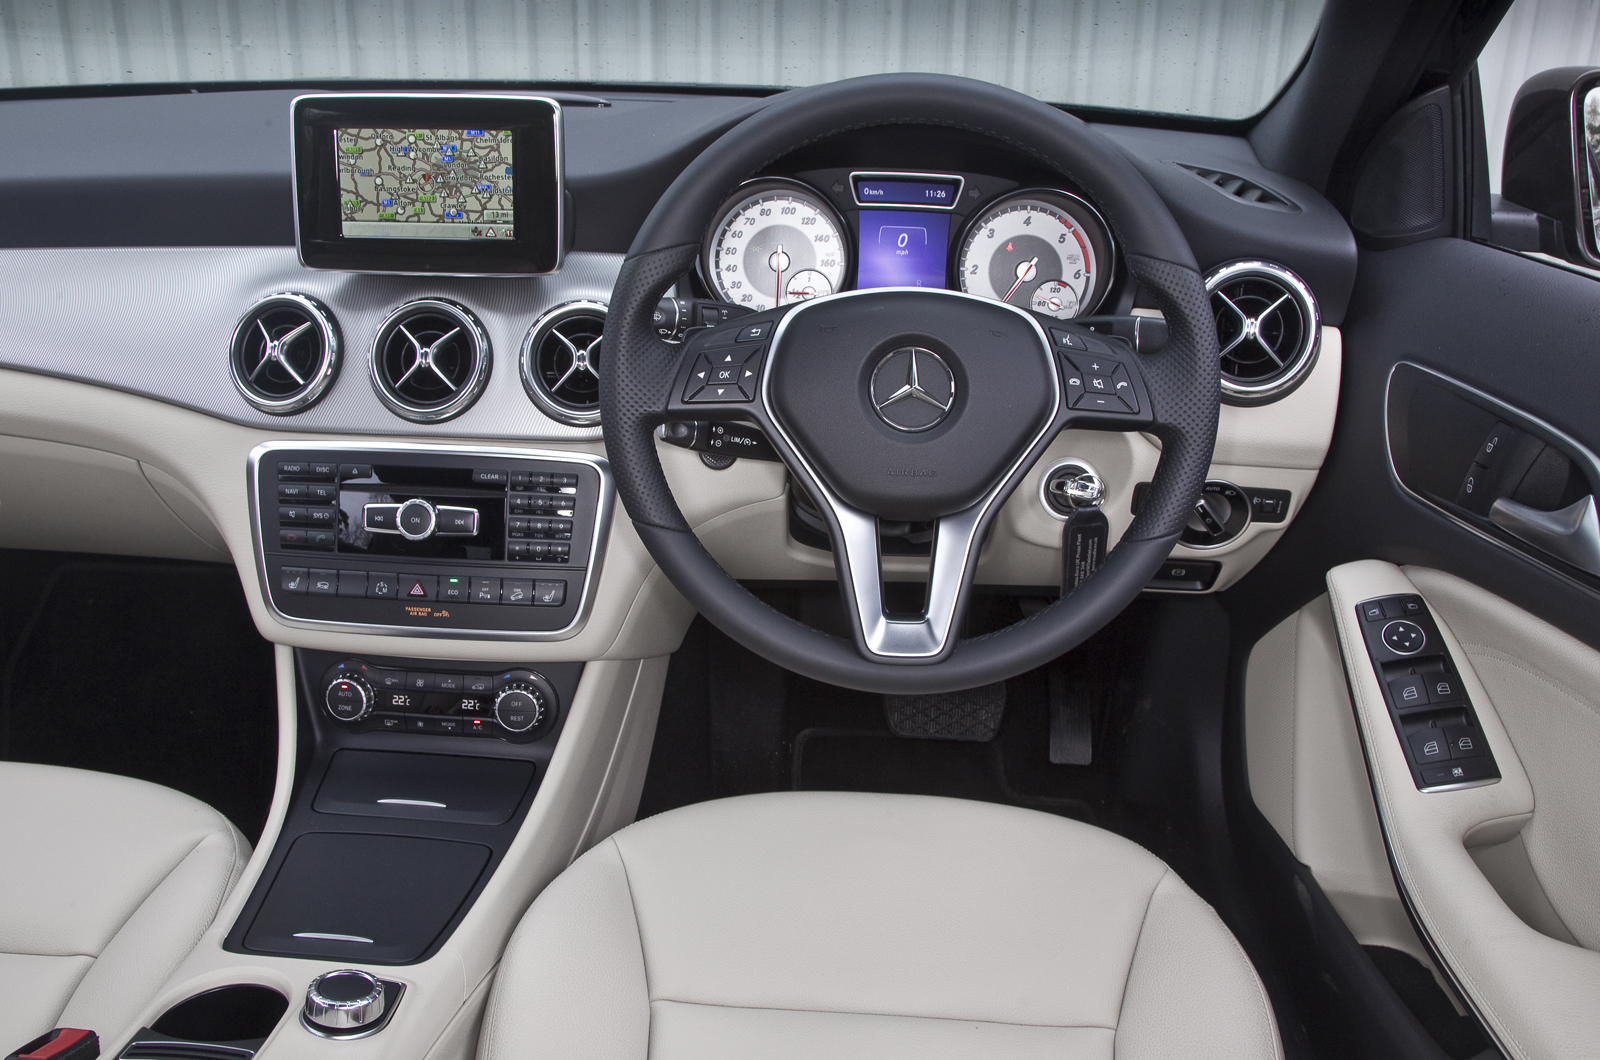 Mercedes-Benz GLA dashboard